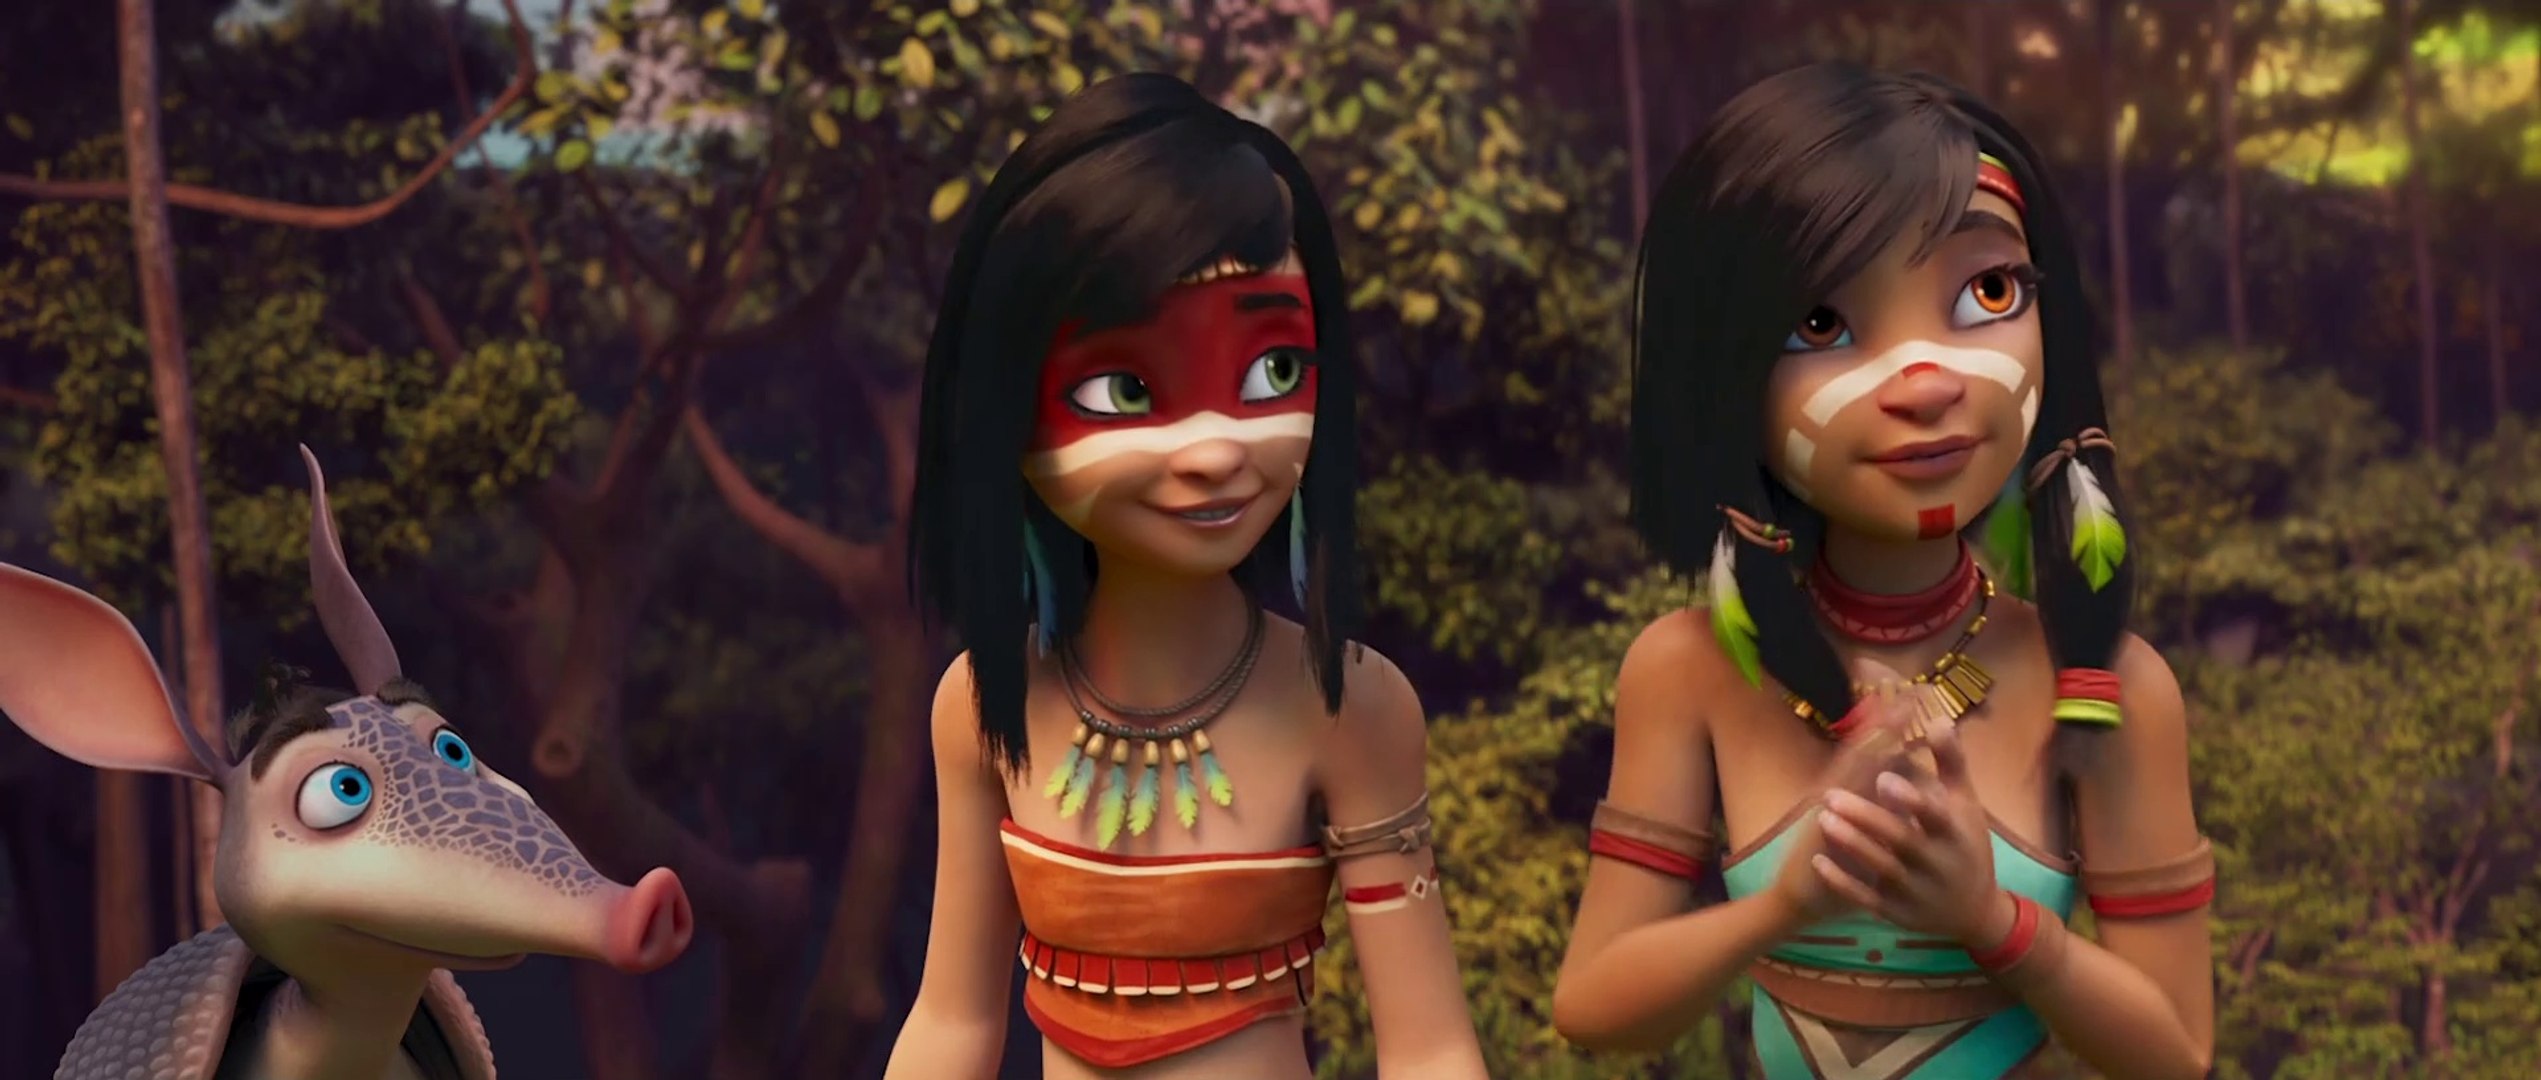 AINBO Spirit of the Amazon Movie (2021) - video Dailymotion